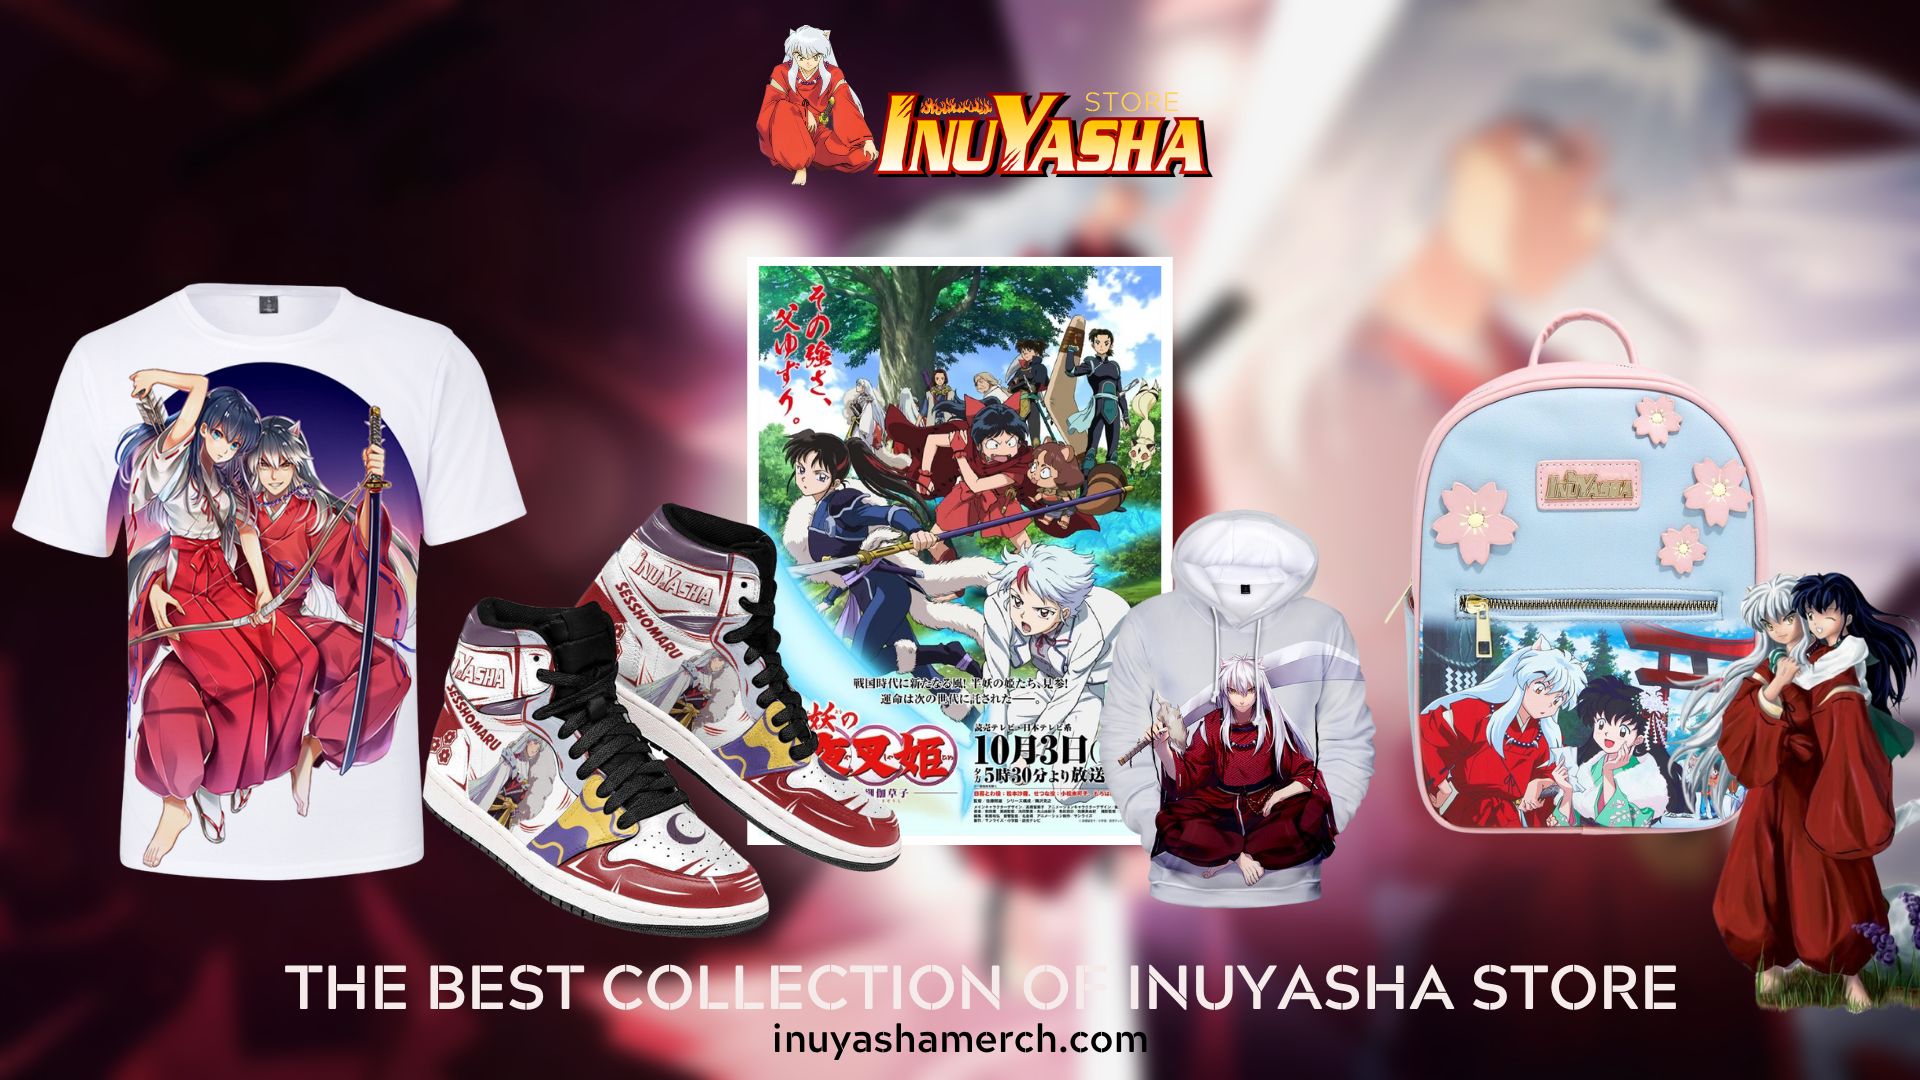 Inuyasha Merch Store Banner - Inuyasha Merch